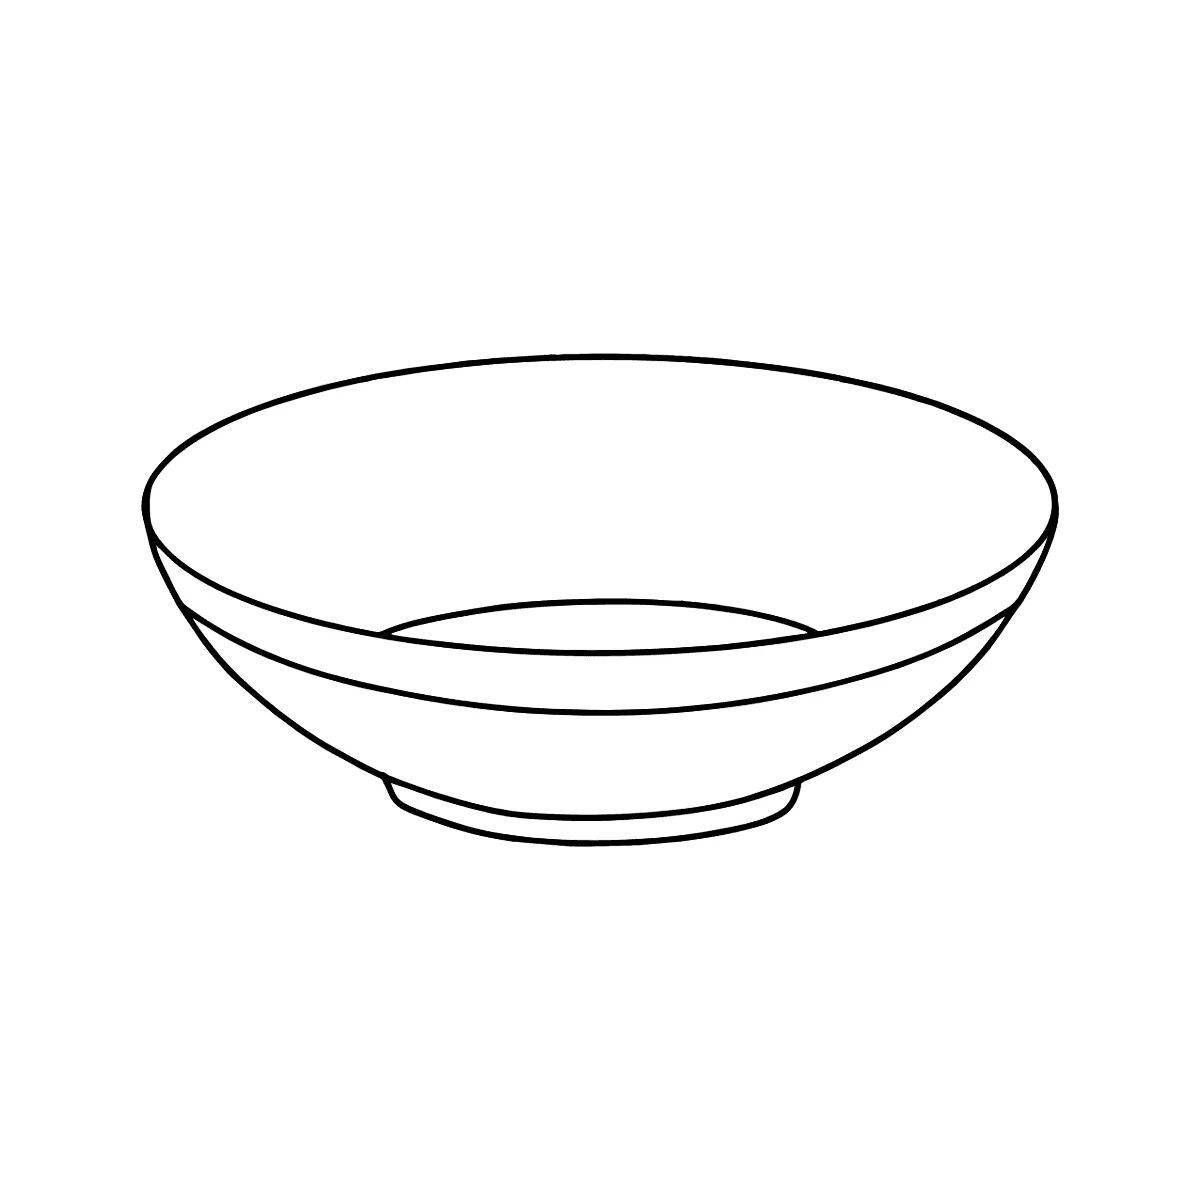 Soup bowl trendy coloring page